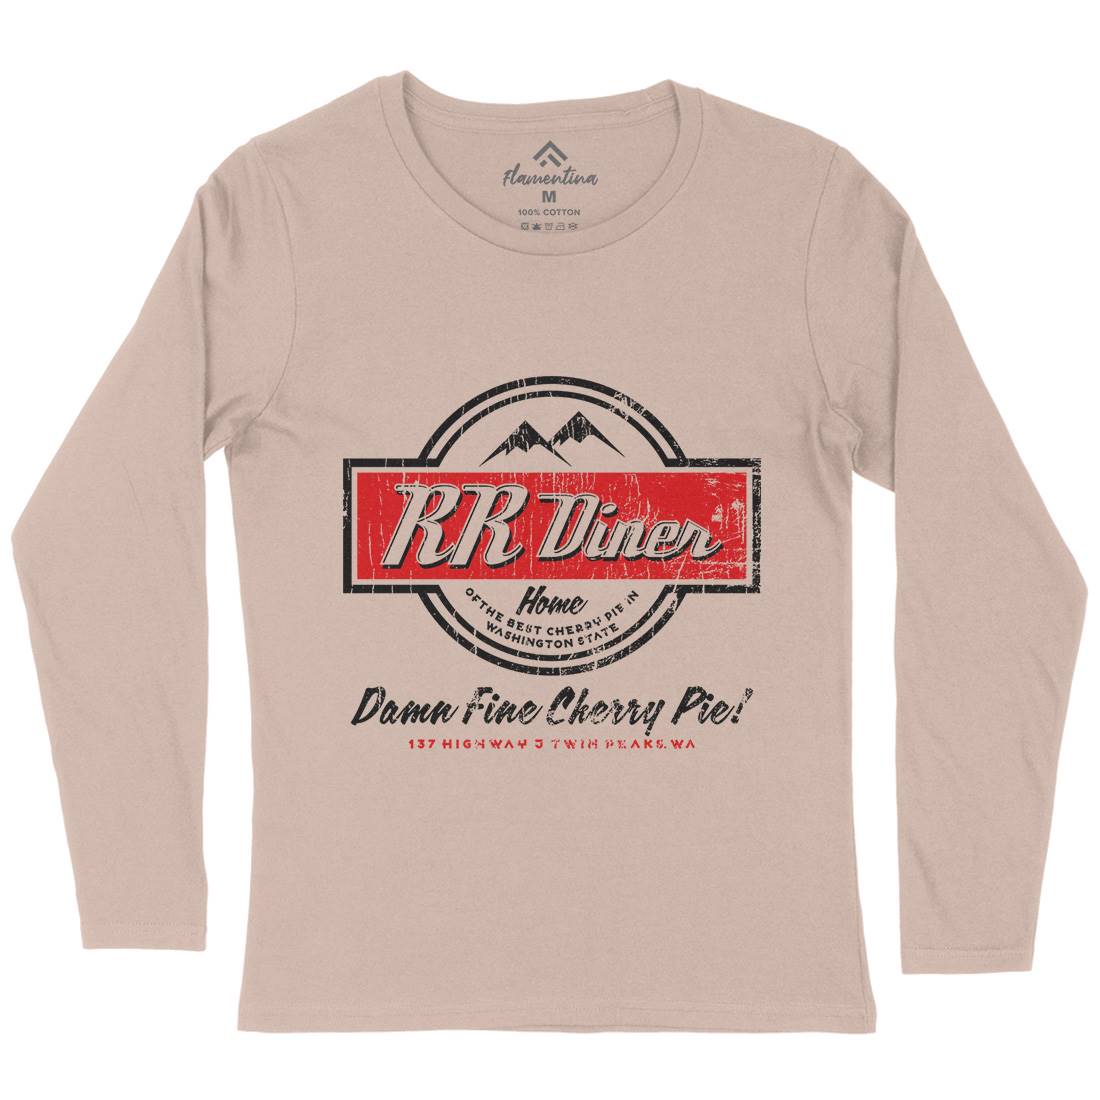 Double Rr Diner Womens Long Sleeve T-Shirt Horror D335